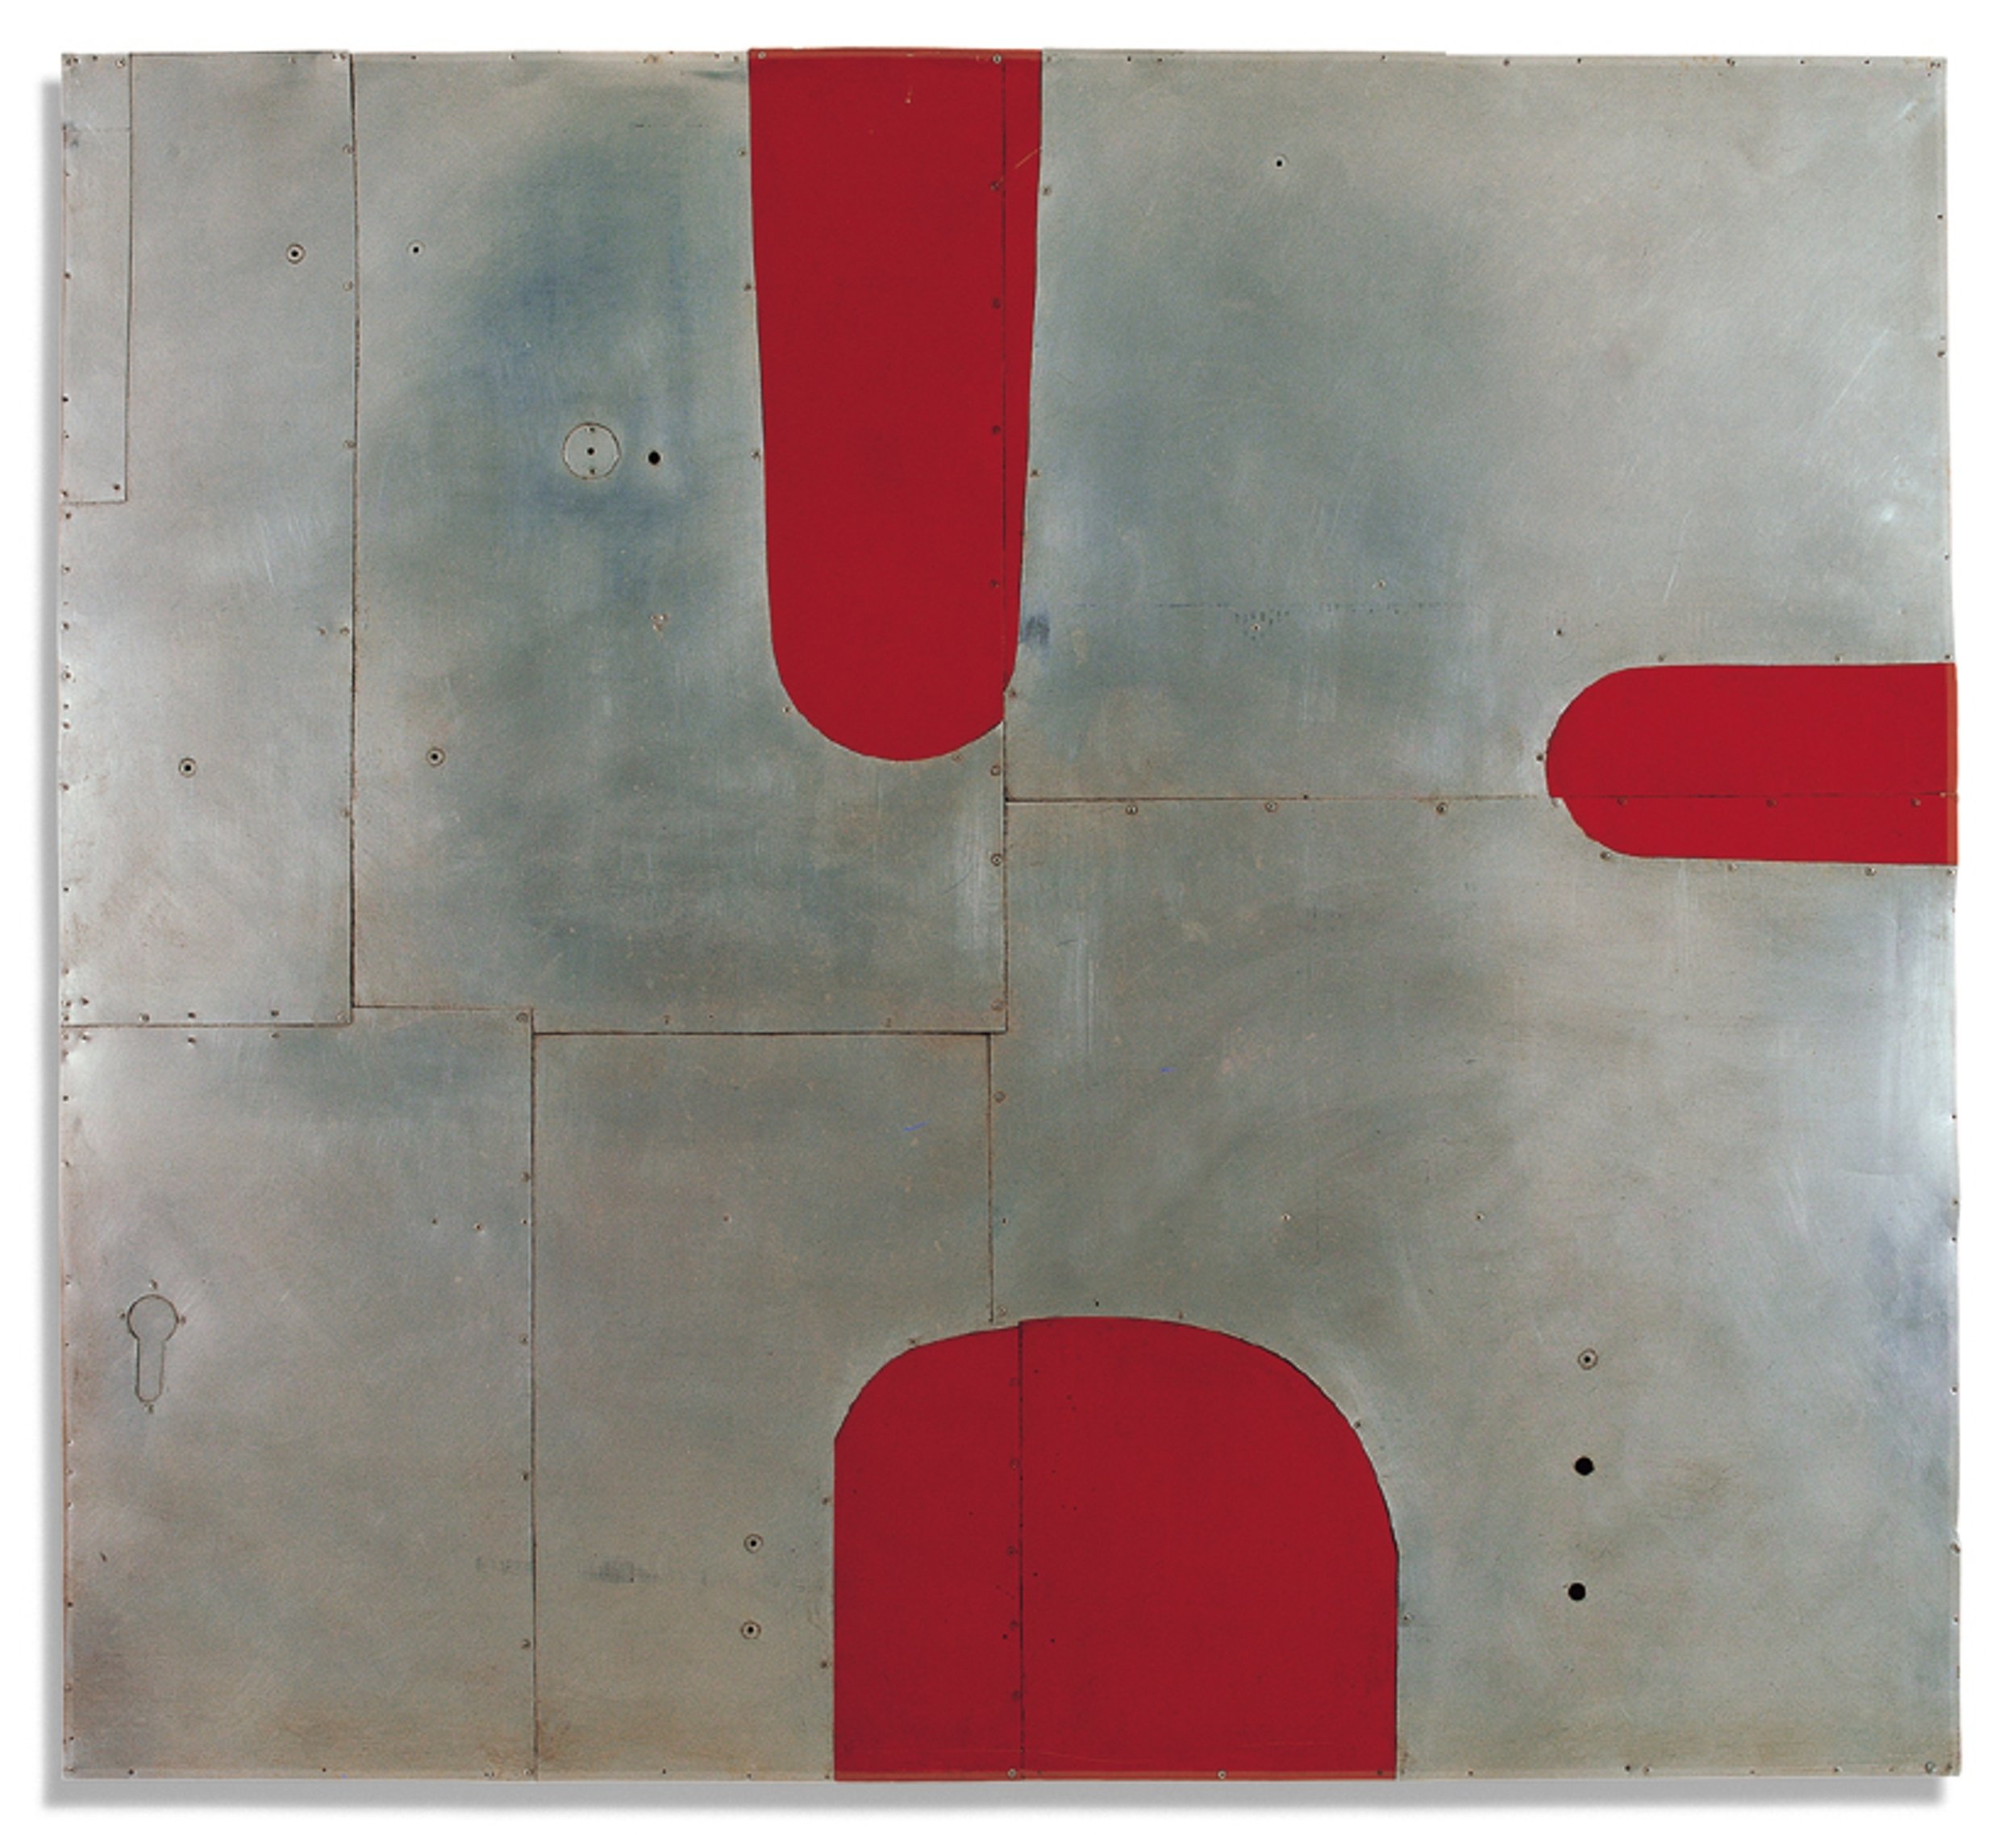 Conrad Marca-Relli,L-1-63 X-K-120, 1963,collage and mixed media,162.5x179cm,64×70 1:2 in(CMR300525)